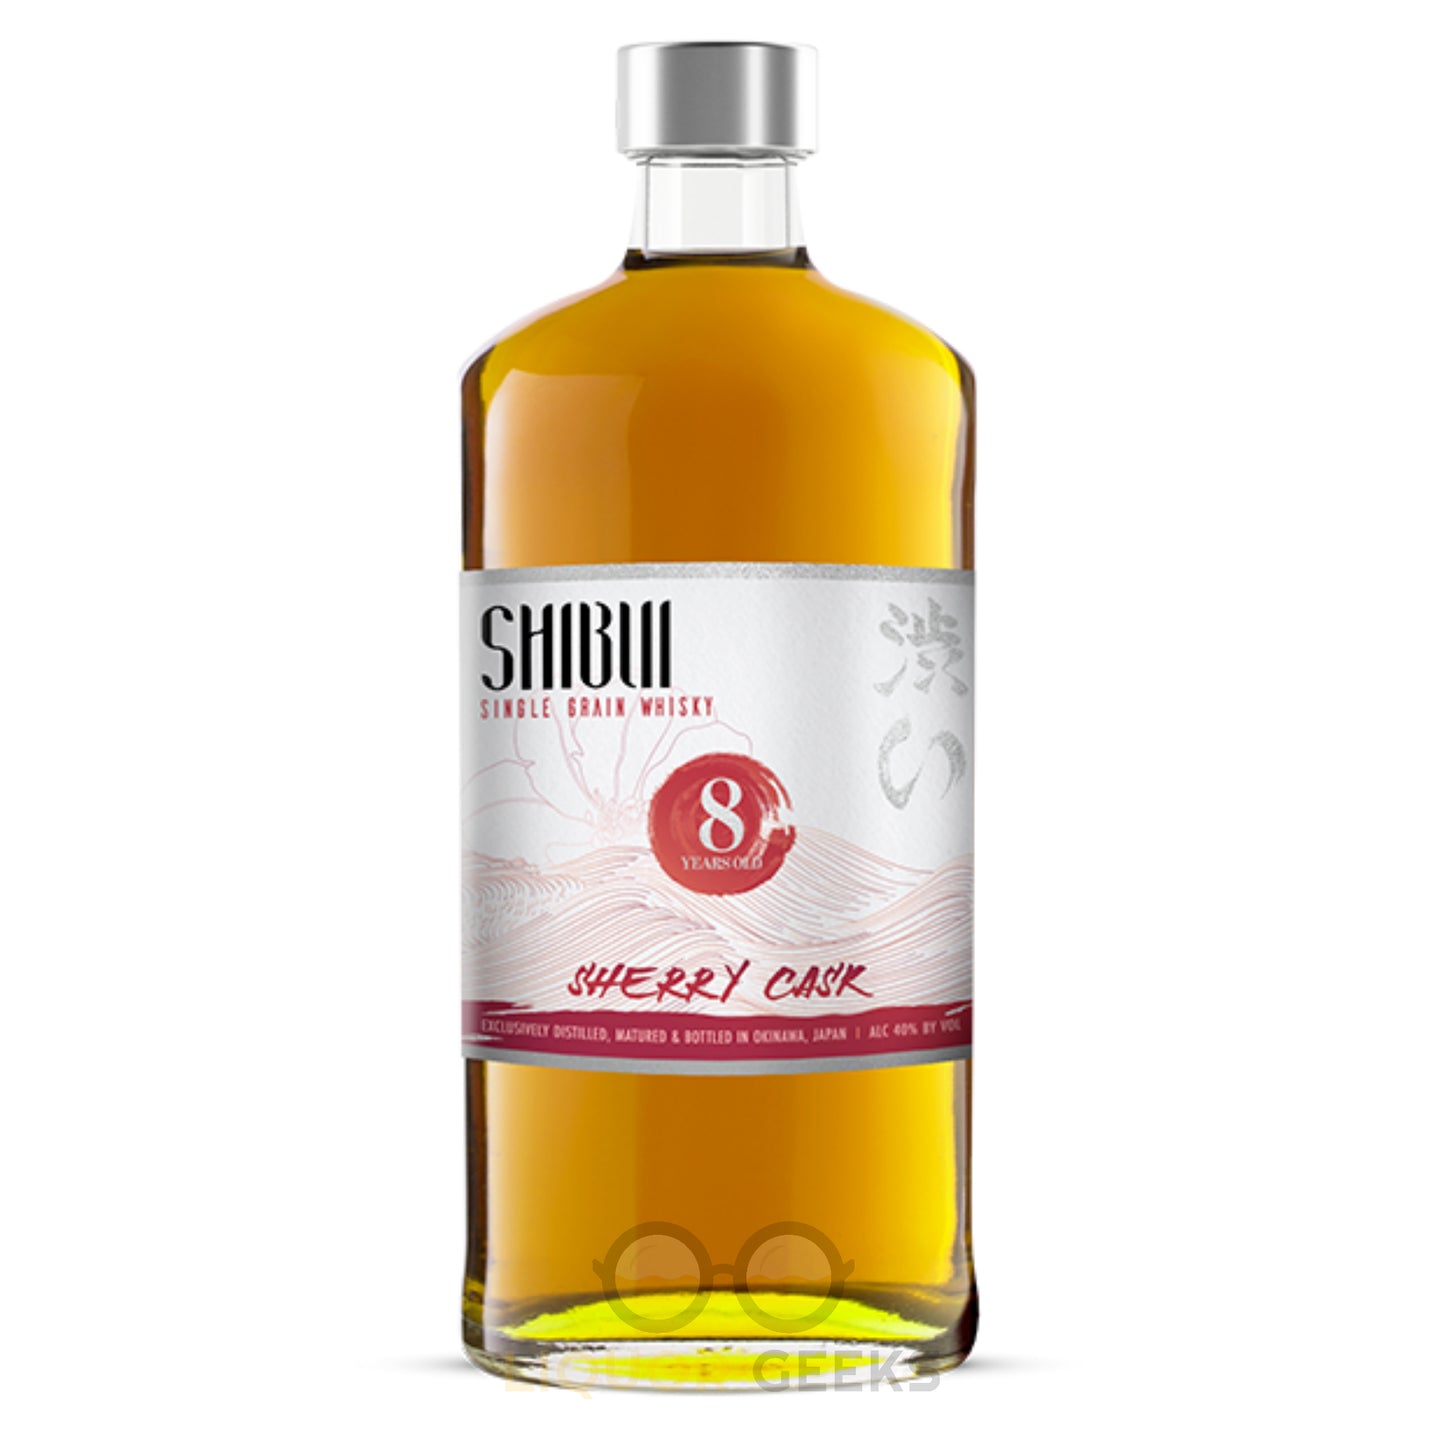 Shibui Single Grain Small Batch Sherry Cask 8 Year - Liquor Geeks